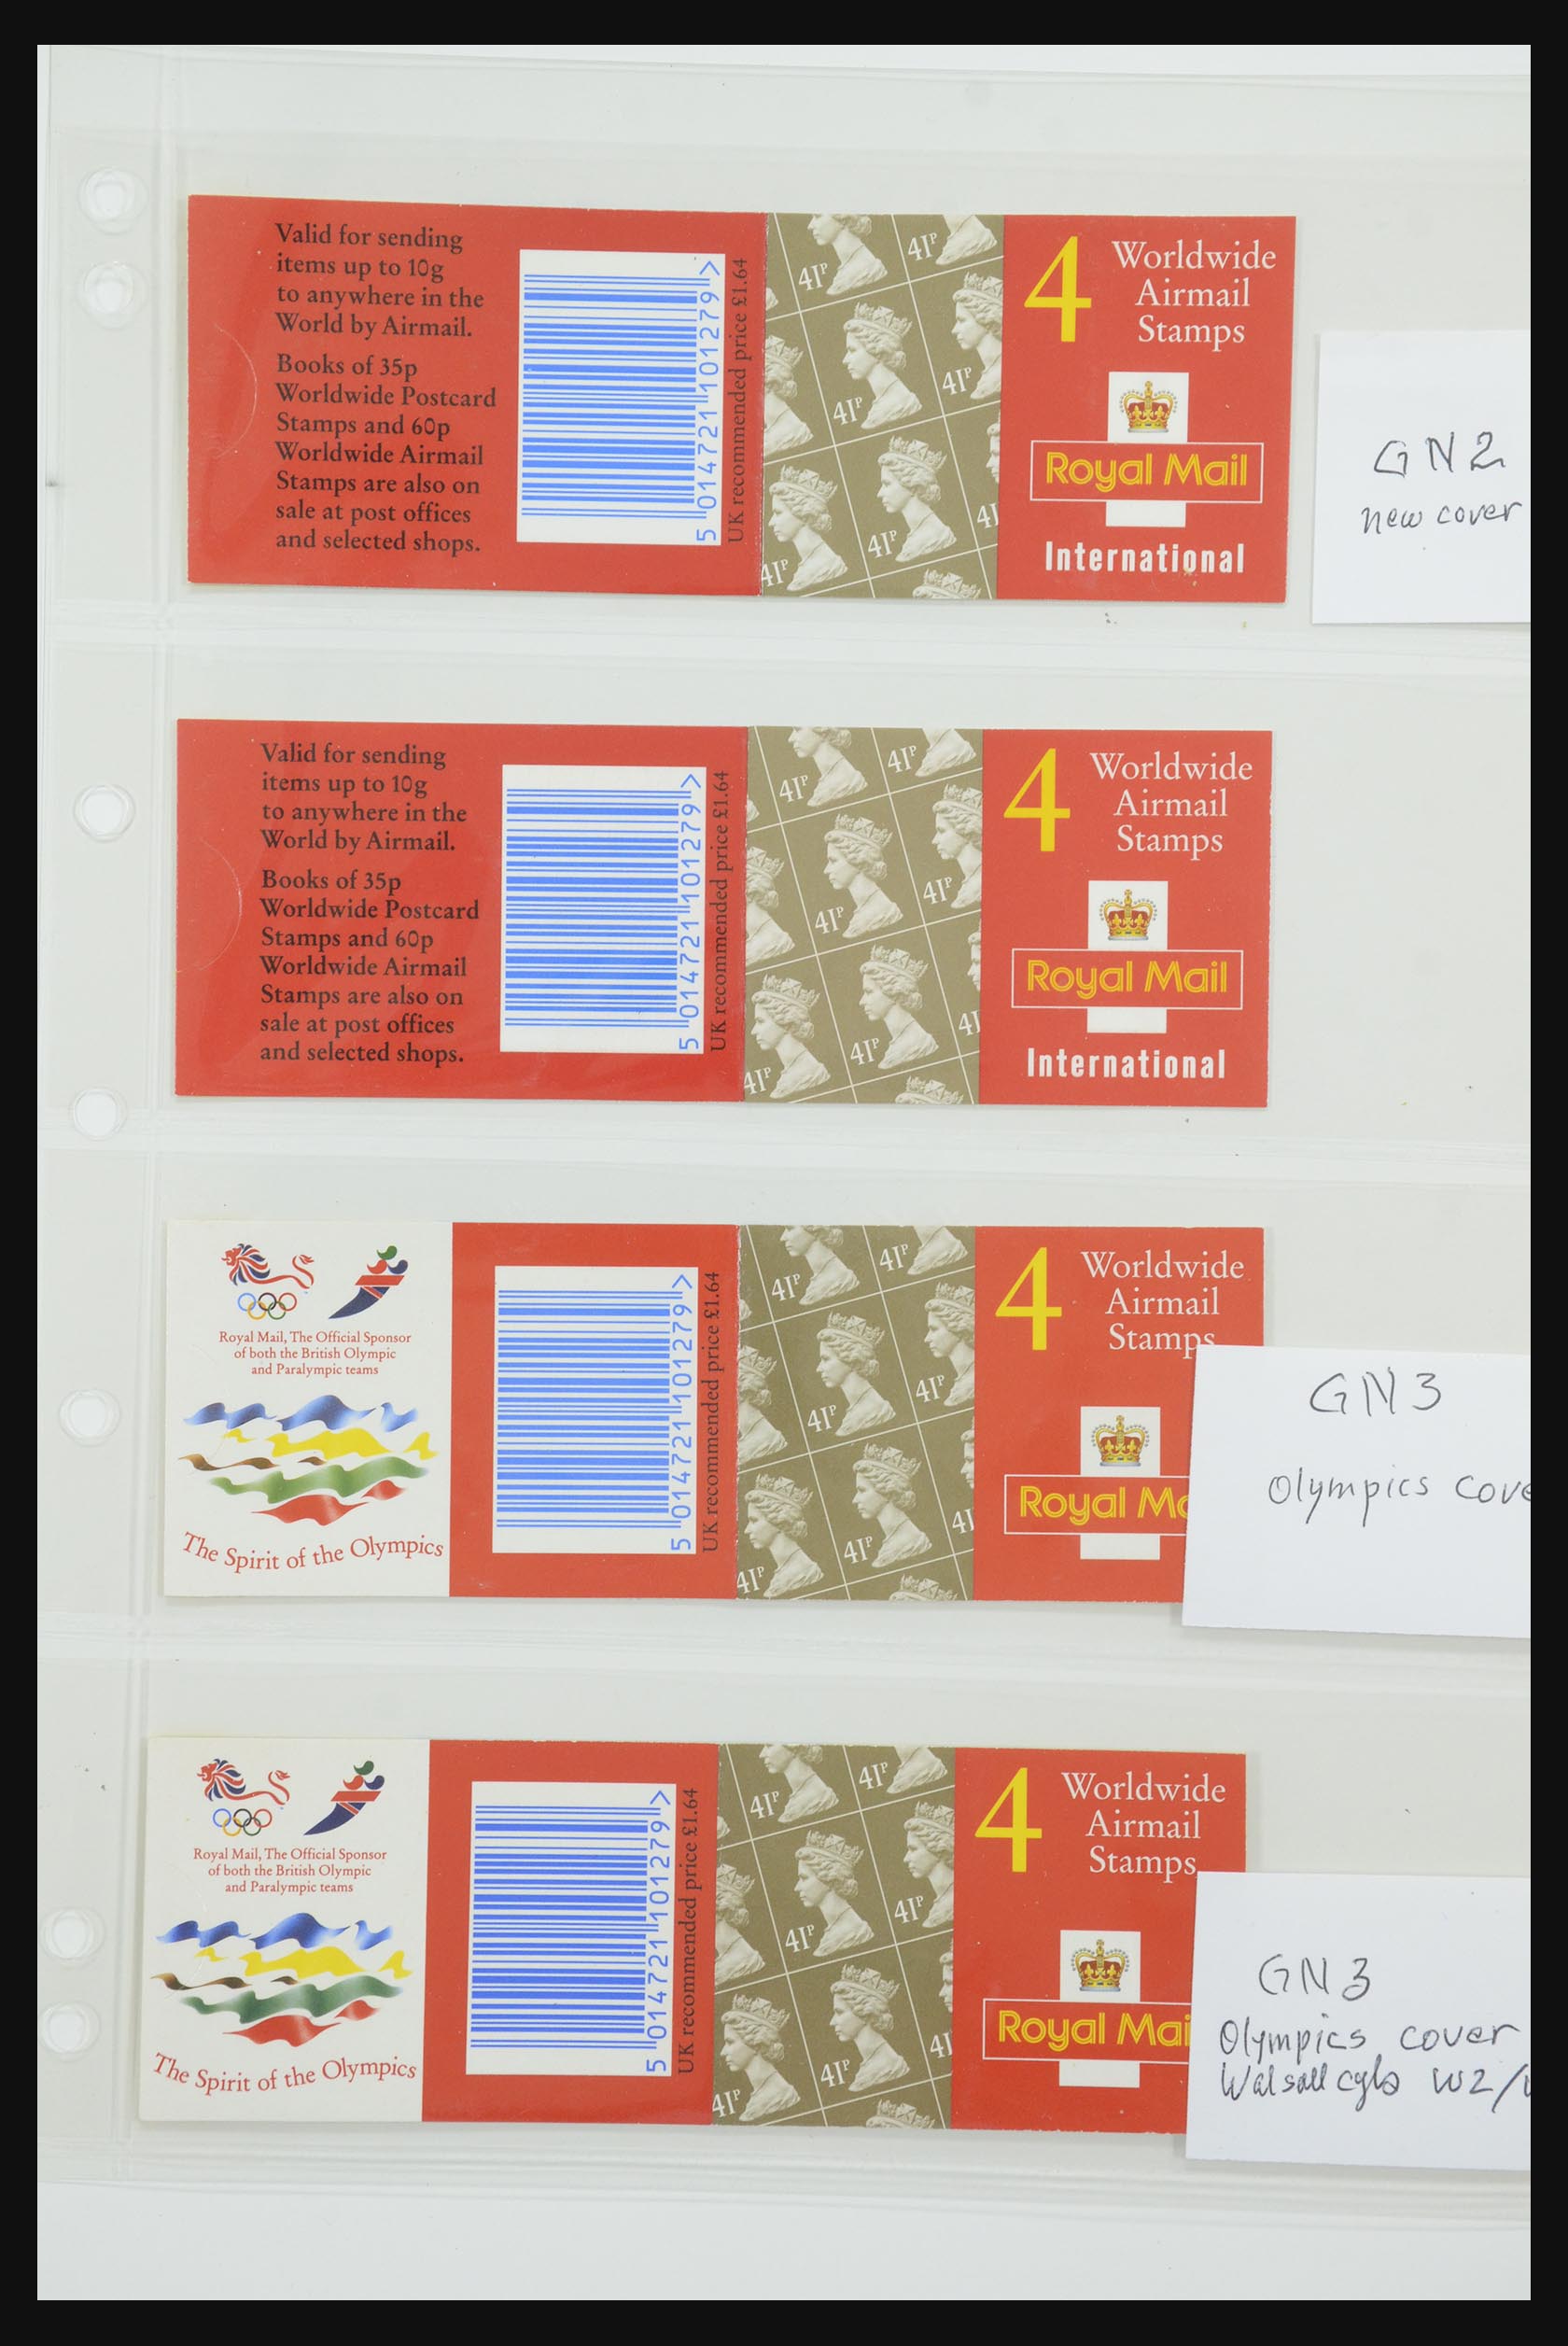 31959 063 - 31959 Great Britain stampbooklets 1987-2016!!